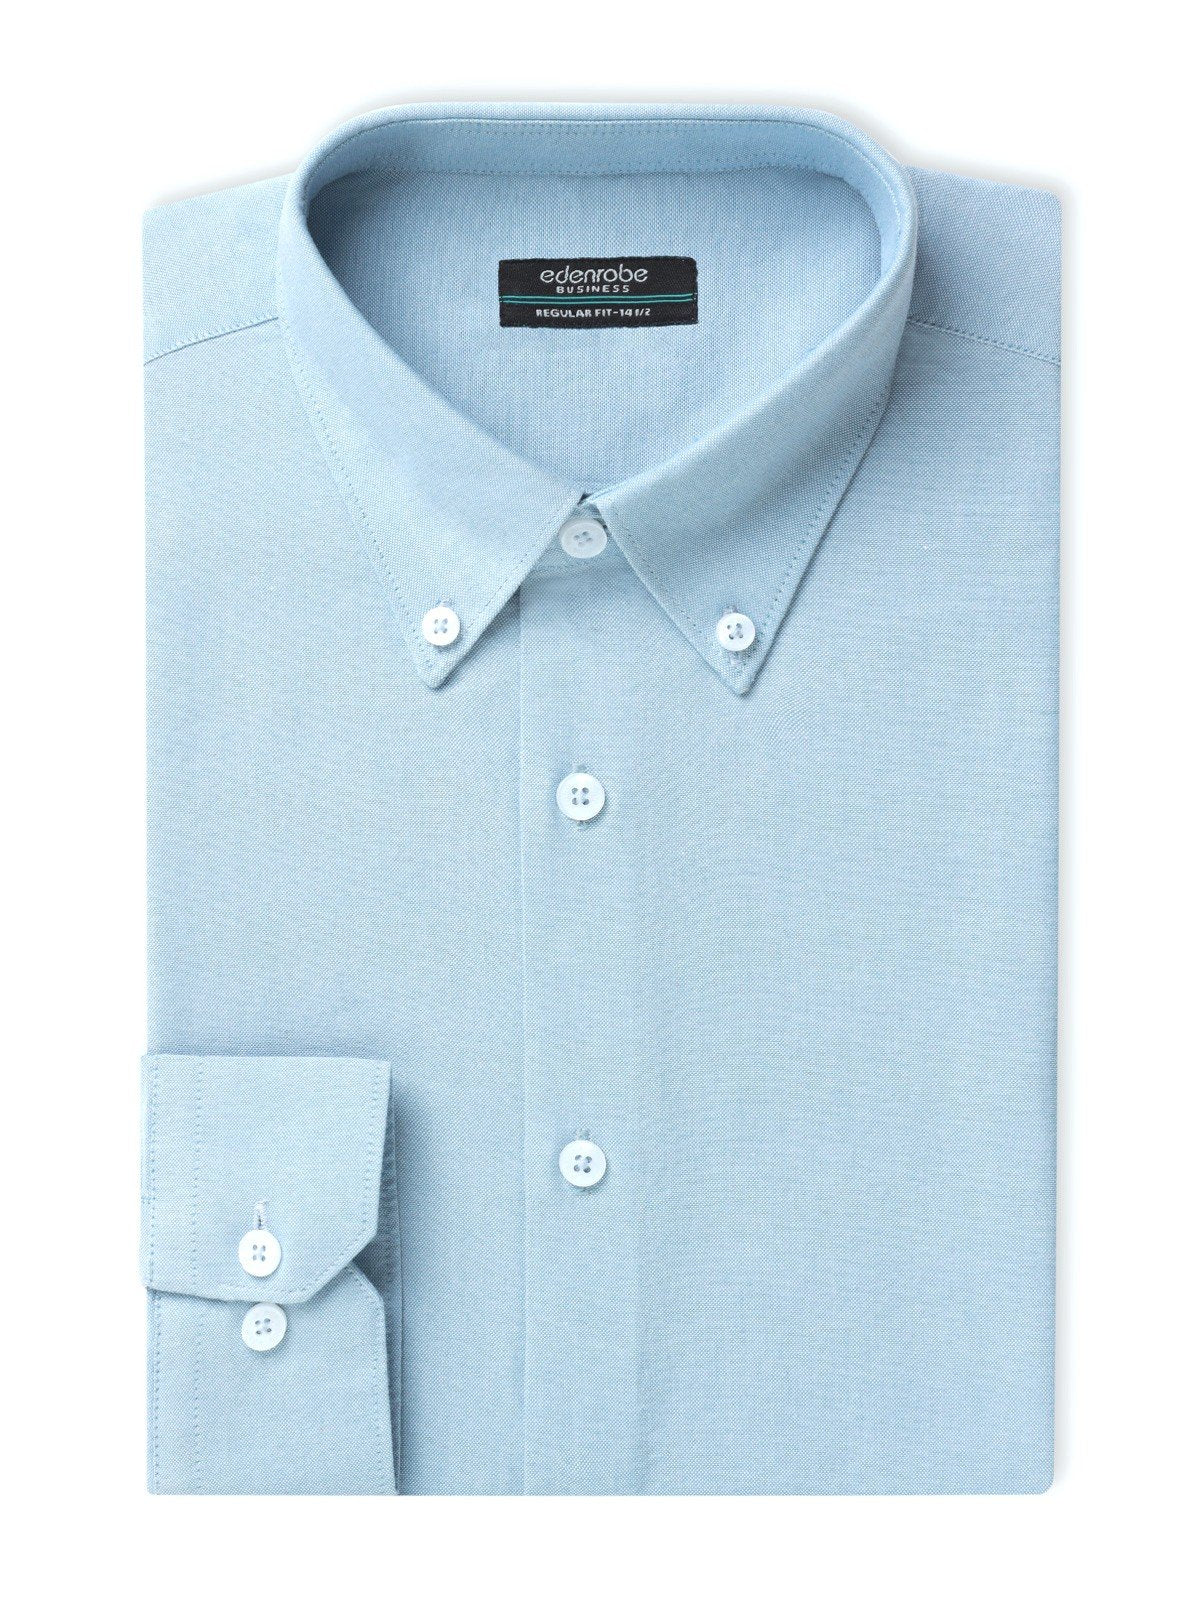 Men's Ice Blue Shirt Plain - EMTSB22-134